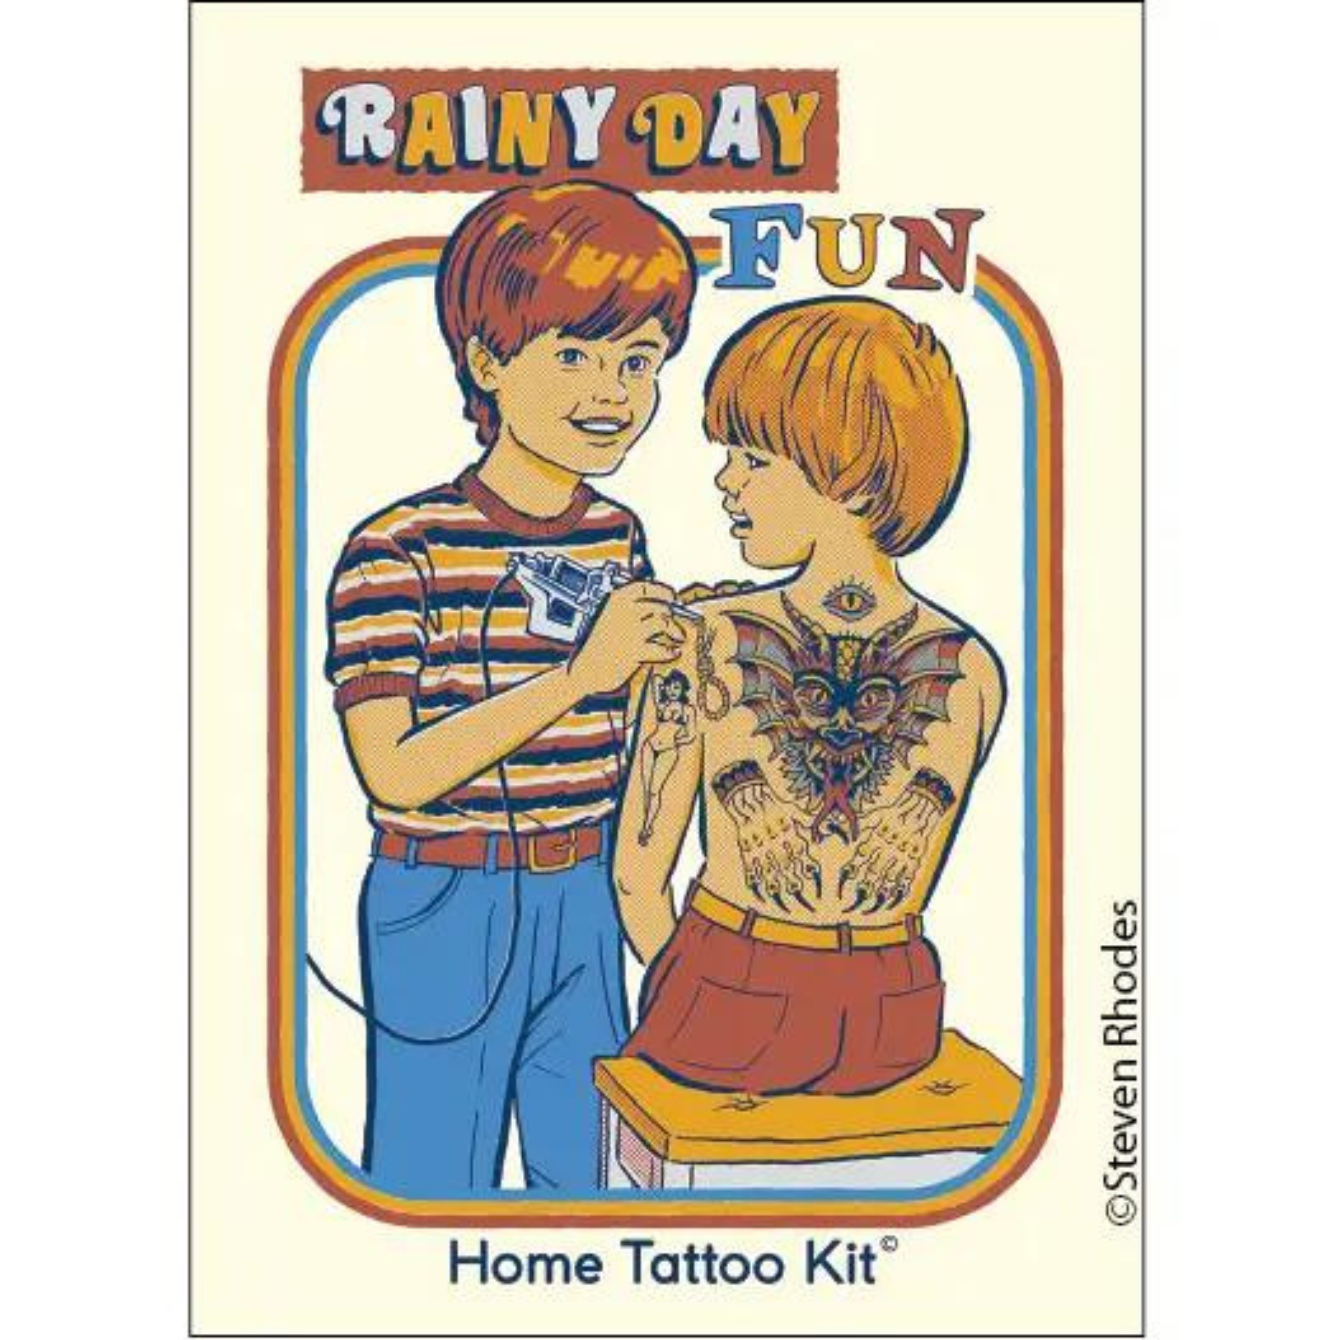 Rainy Day Fun. Home Tattoo Kit